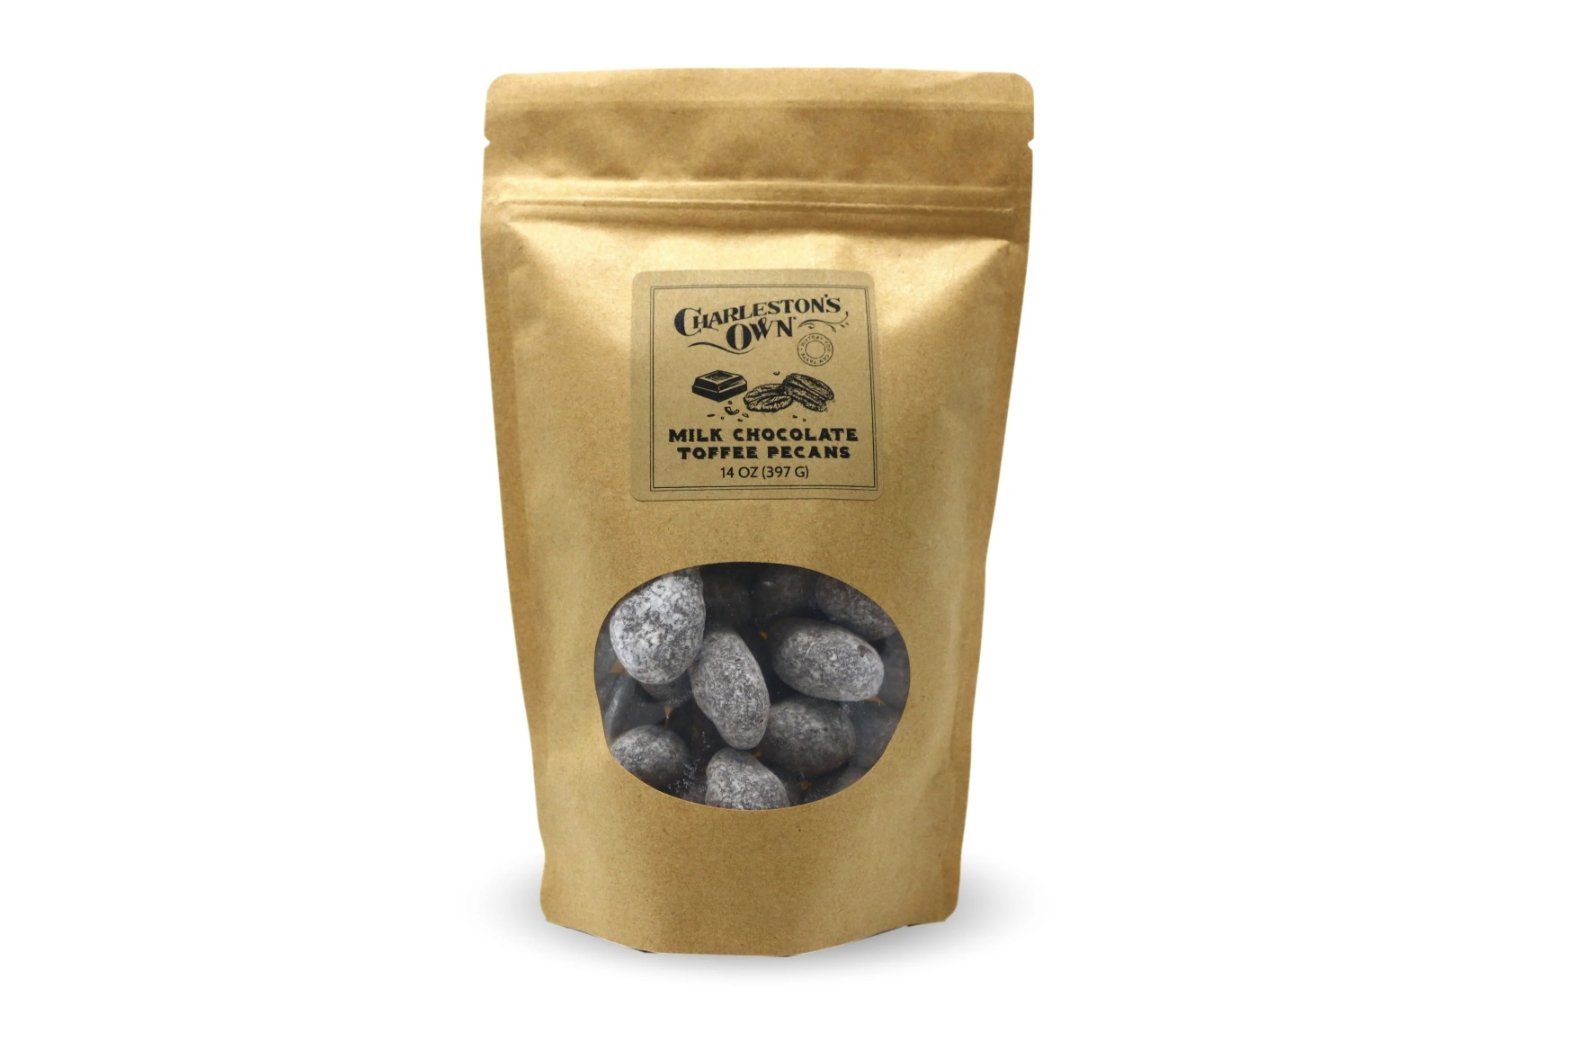 Charleston's Own Milk Chocolate Toffee Pecans (Limited-Edition) - Essentially Charleston